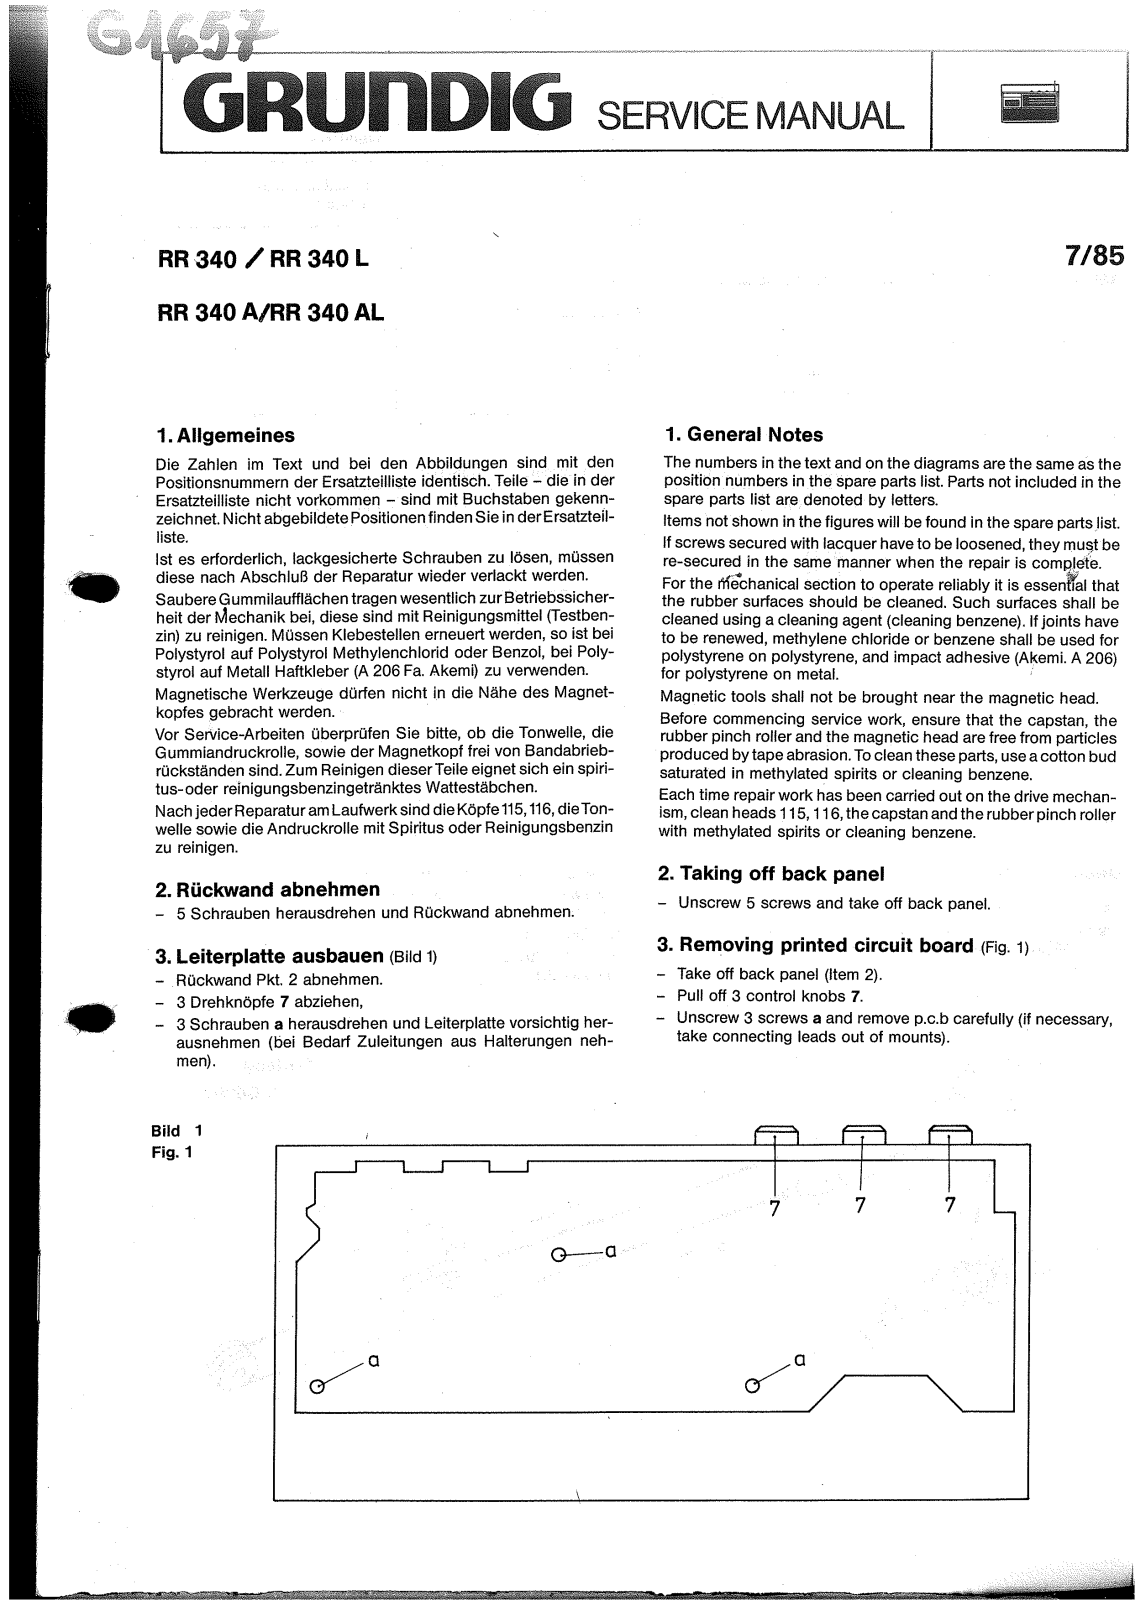 Grundig RR-340 Service Manual